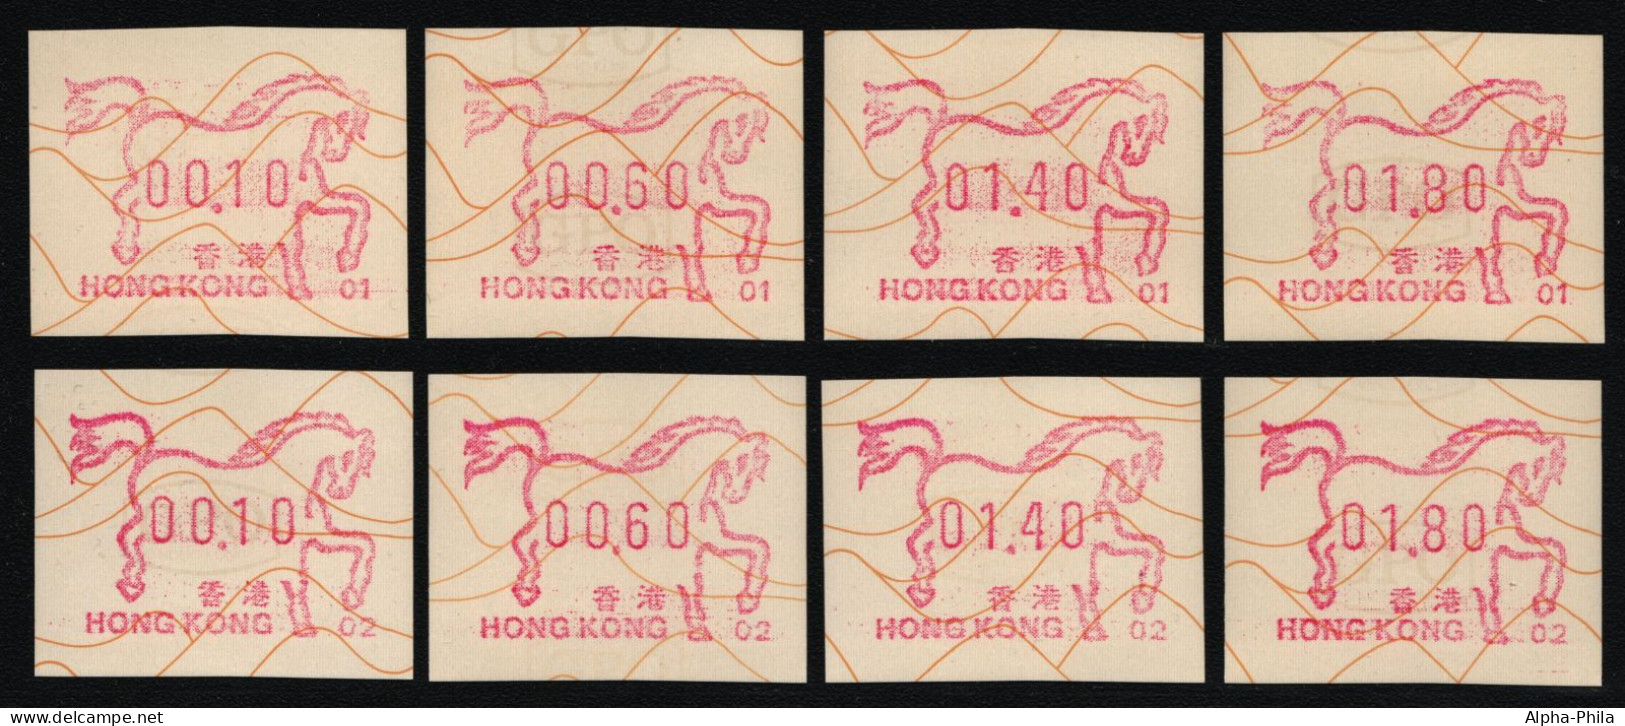 Hongkong 1990 - Mi-Nr. ATM 5 ** - MNH - Automat 01 & 02 - Je 4 Wertstufen - Automatenmarken